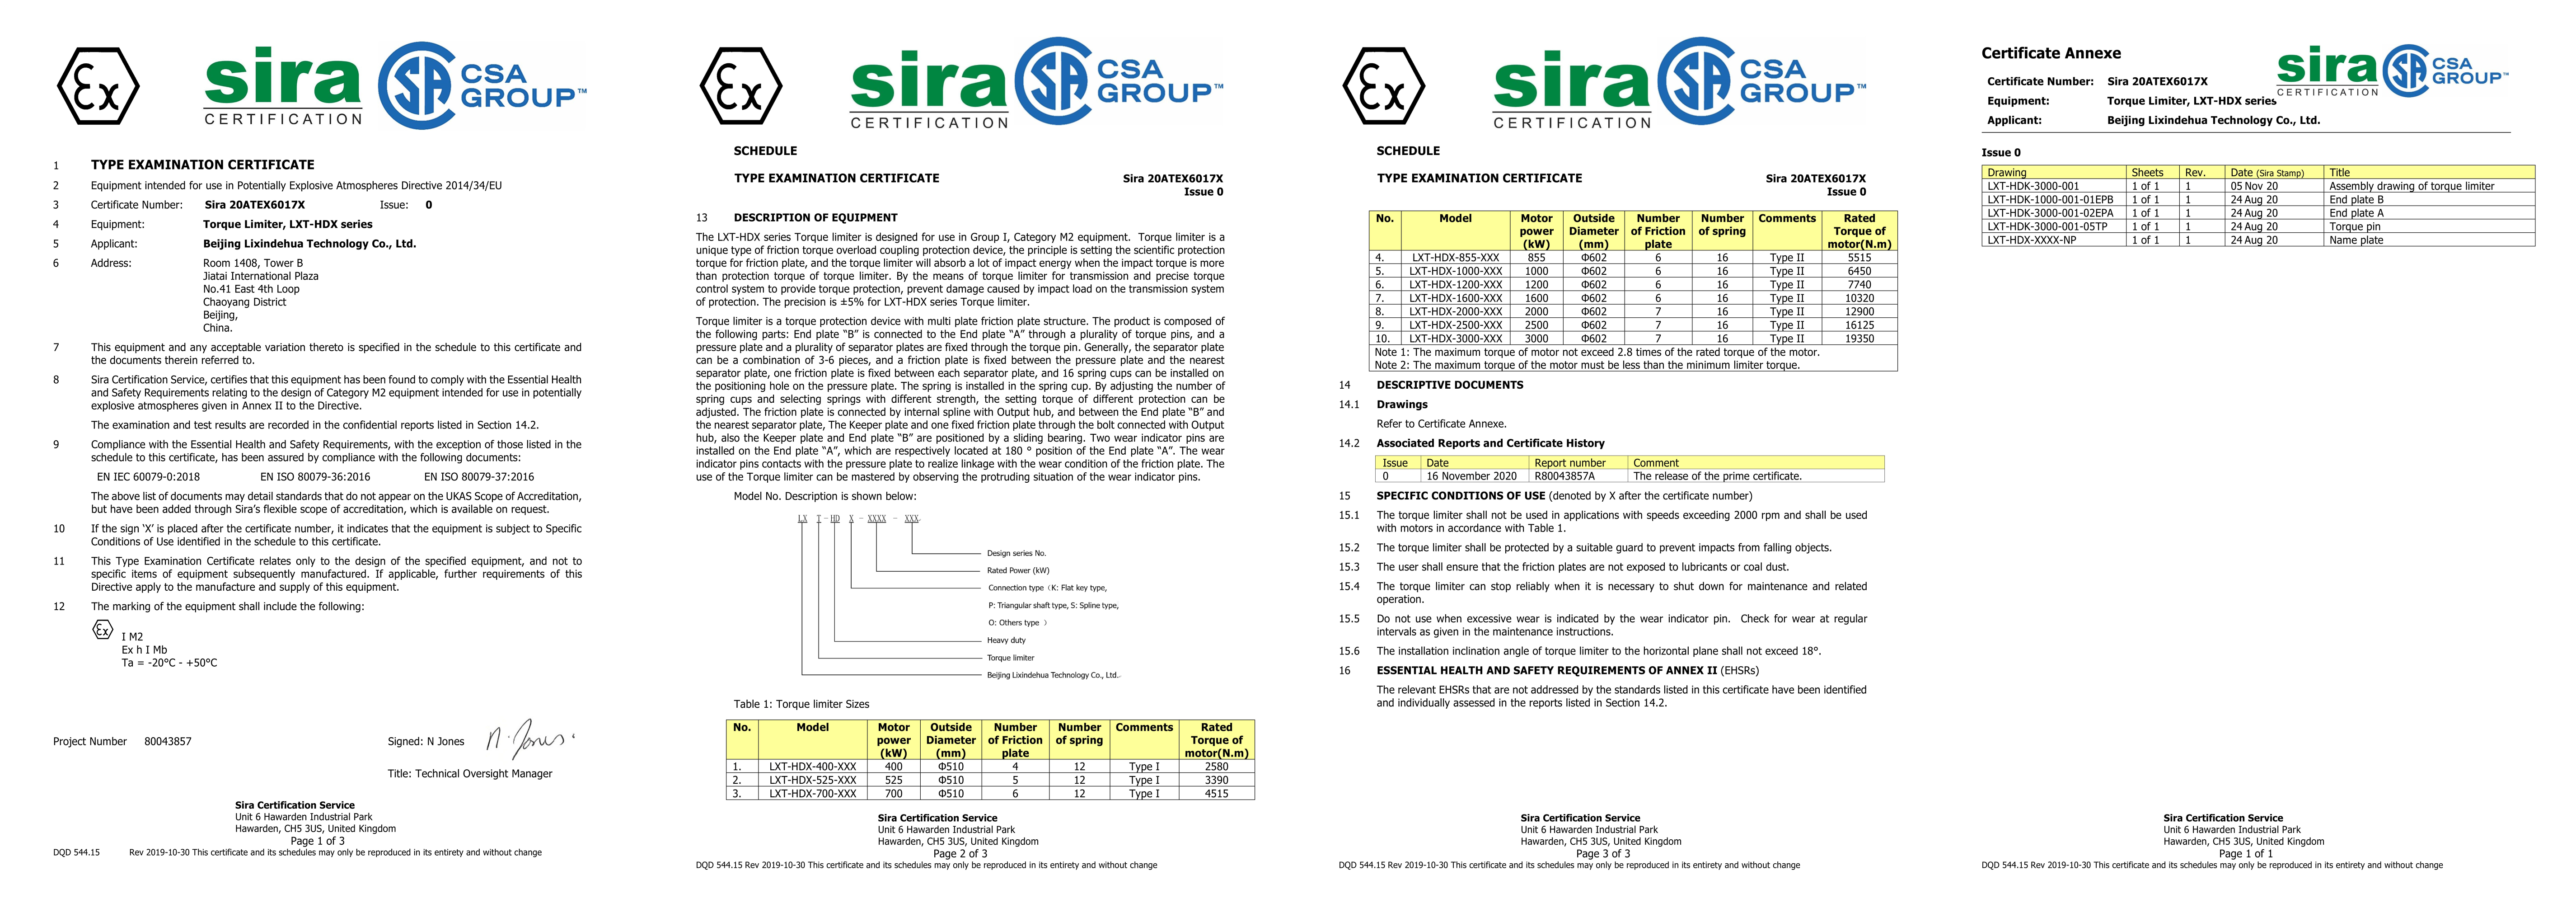 Sira certification